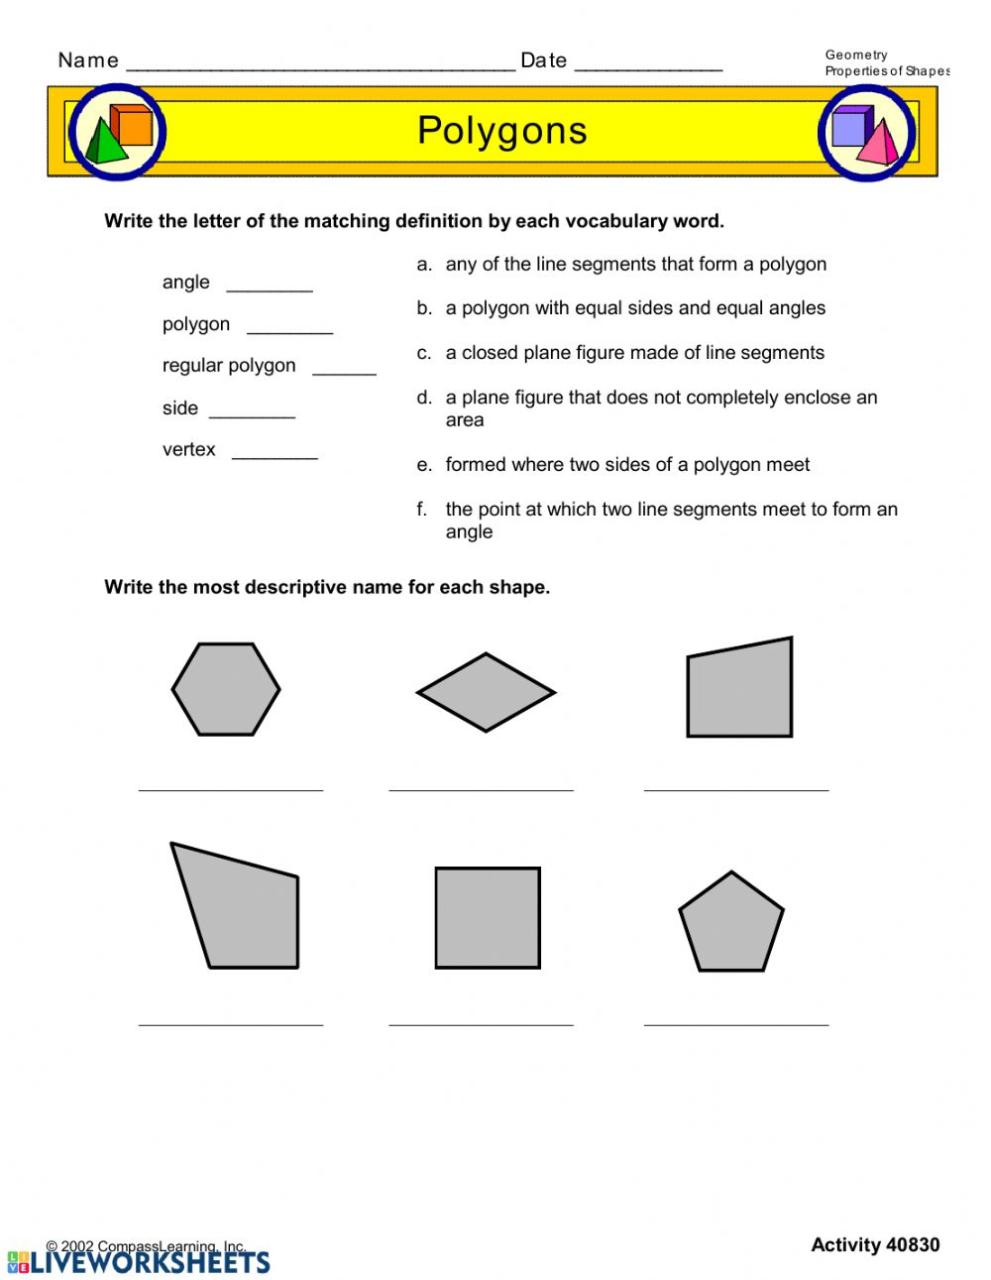 Attributes of Polygons worksheet